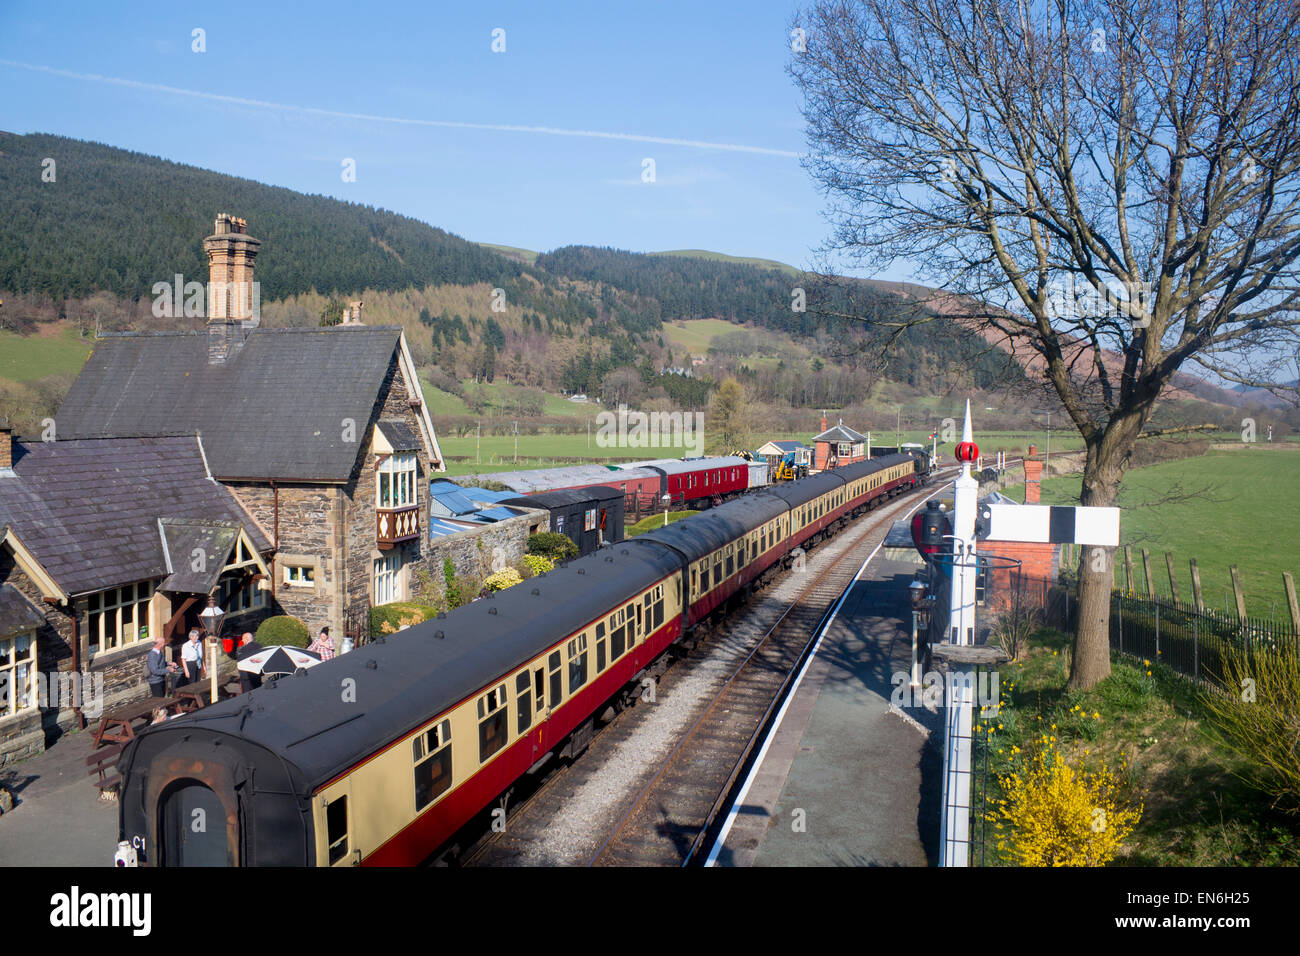 Train à vapeur Carrog Llangollen Steam Railway Station Denbighshire North East Wales UK Banque D'Images